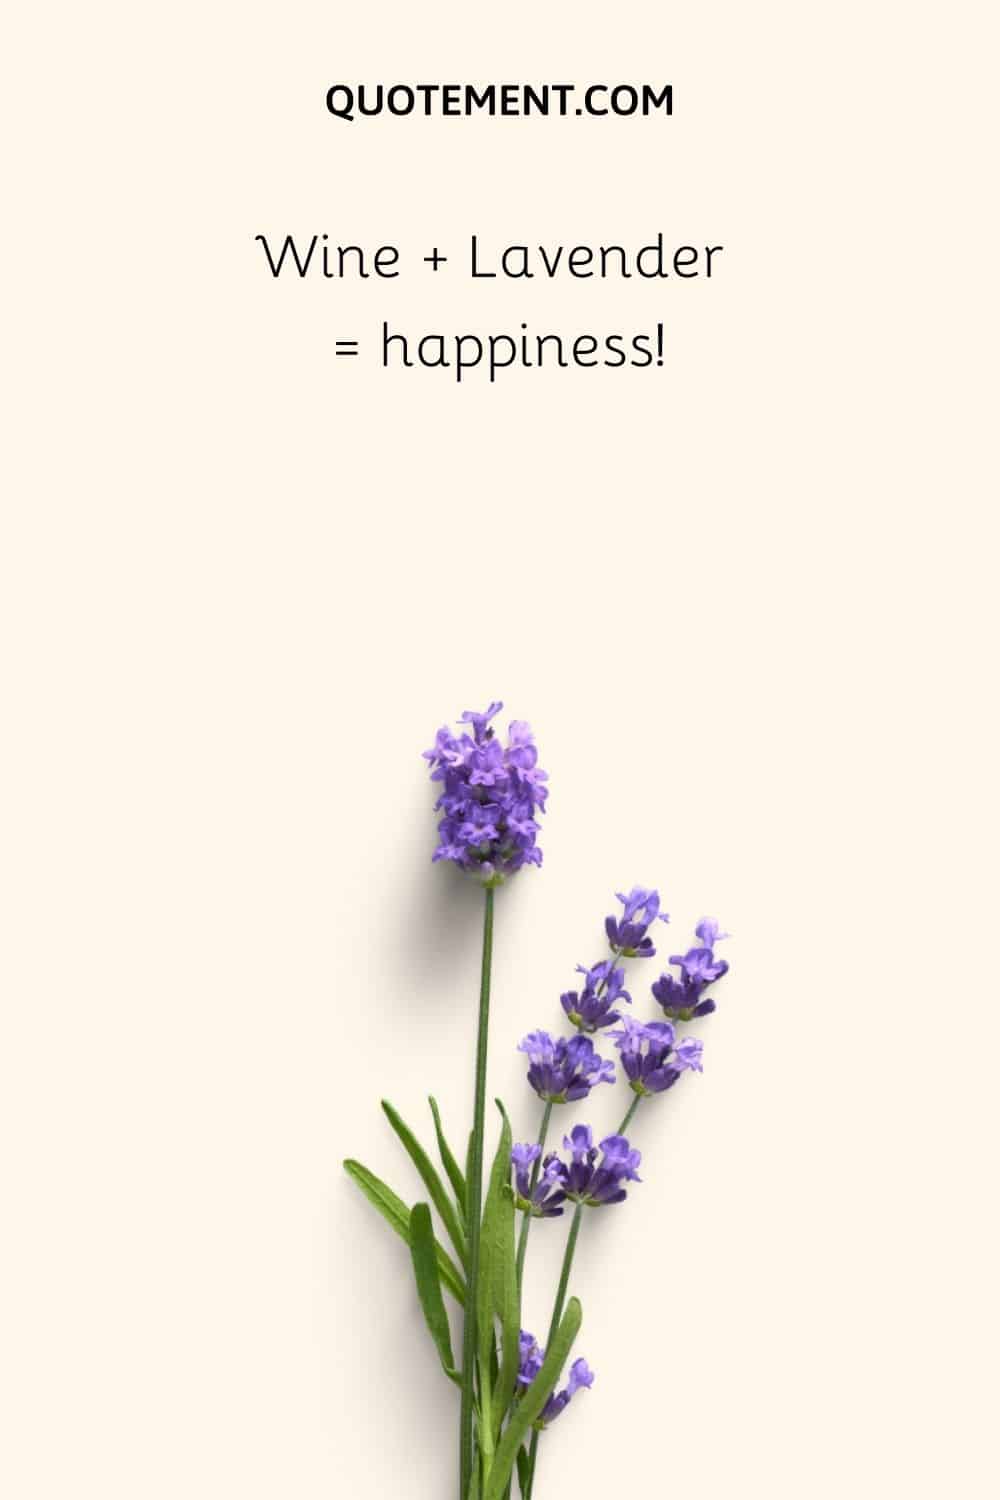 Wine + Lavender = happiness